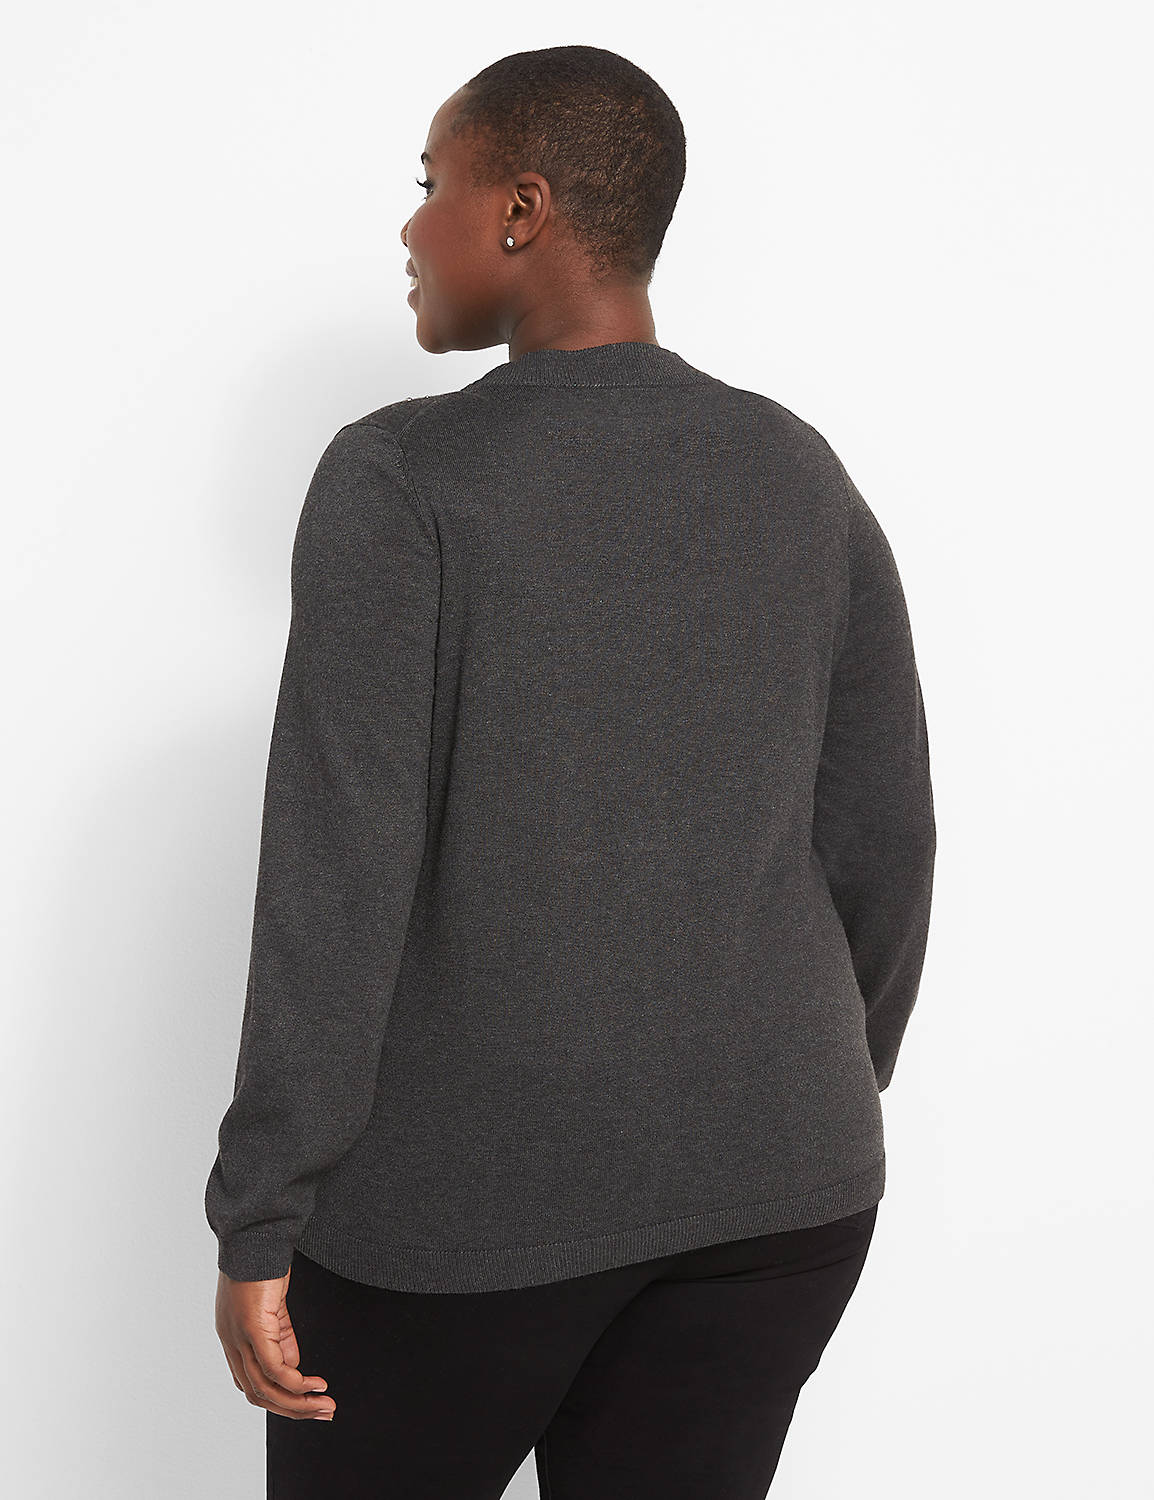 Crew-Neck Rhinestone Sweater Product Image 2